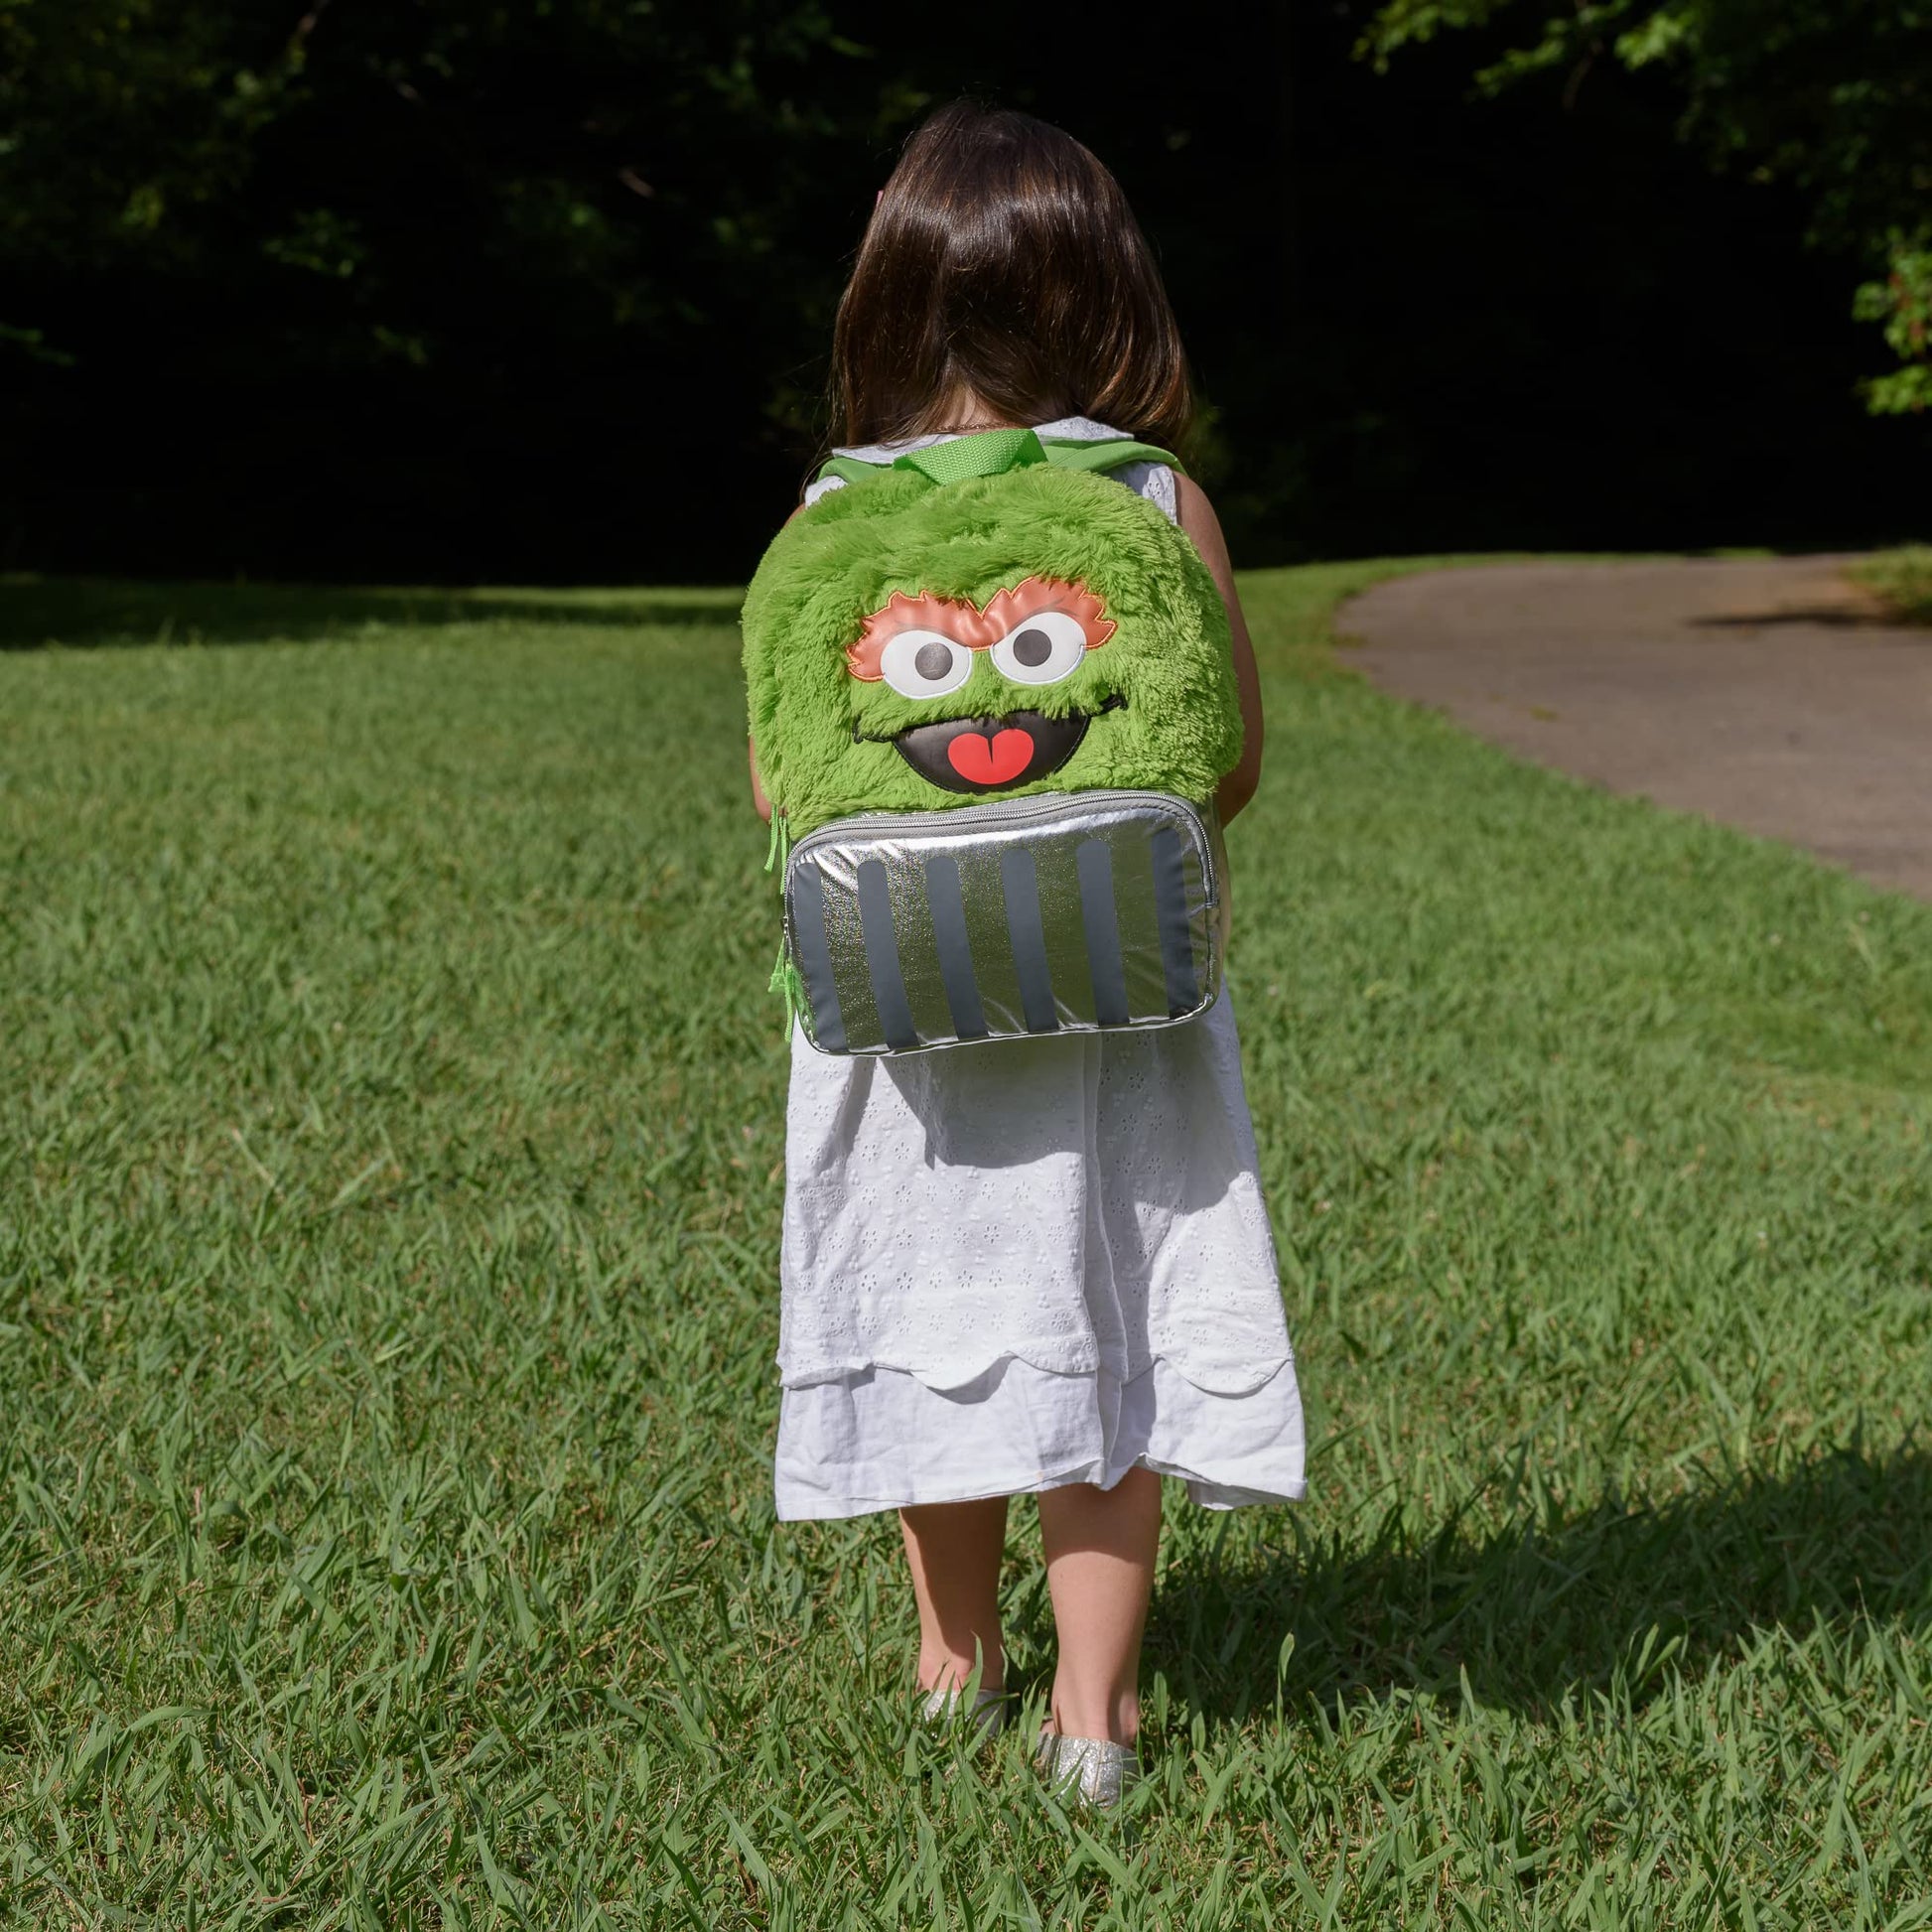 Sesame Street Elmo and Cookie Monster Mini Backpacks for Toddler, Boys, and Girls, School or Travel